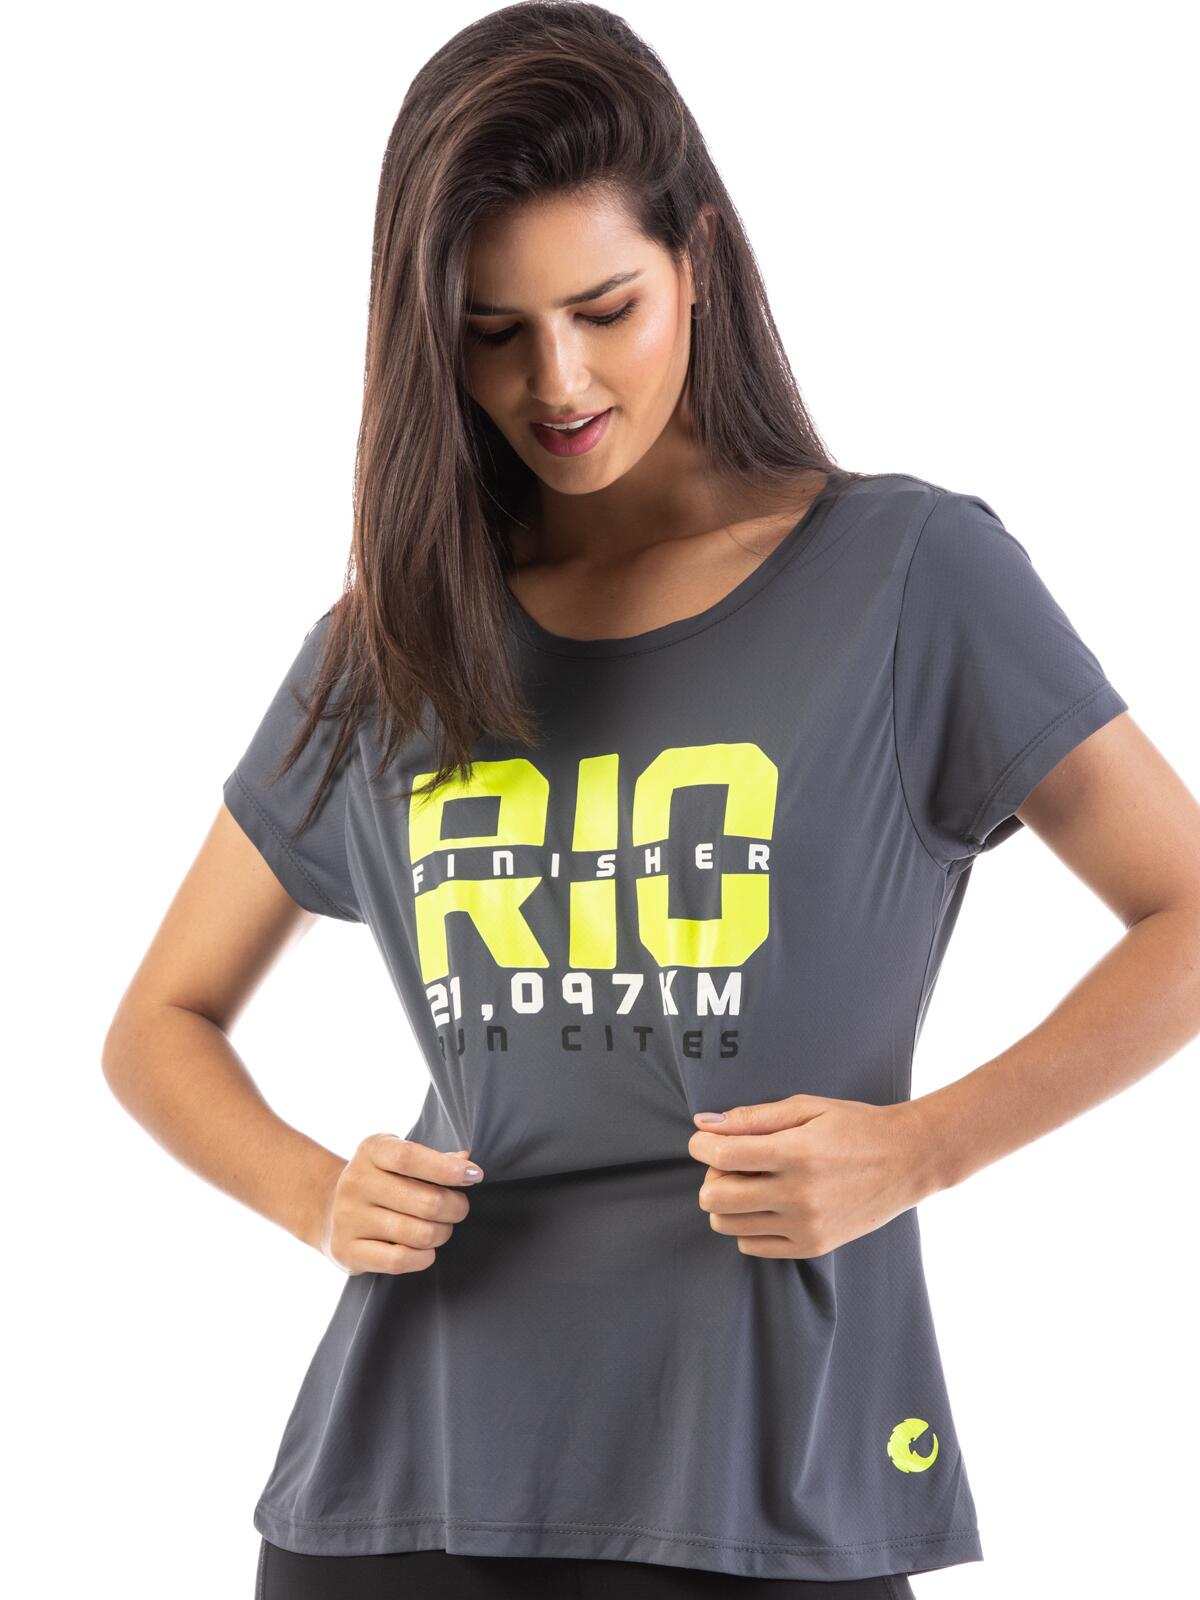 Camiseta Finisher Rio City CINZA